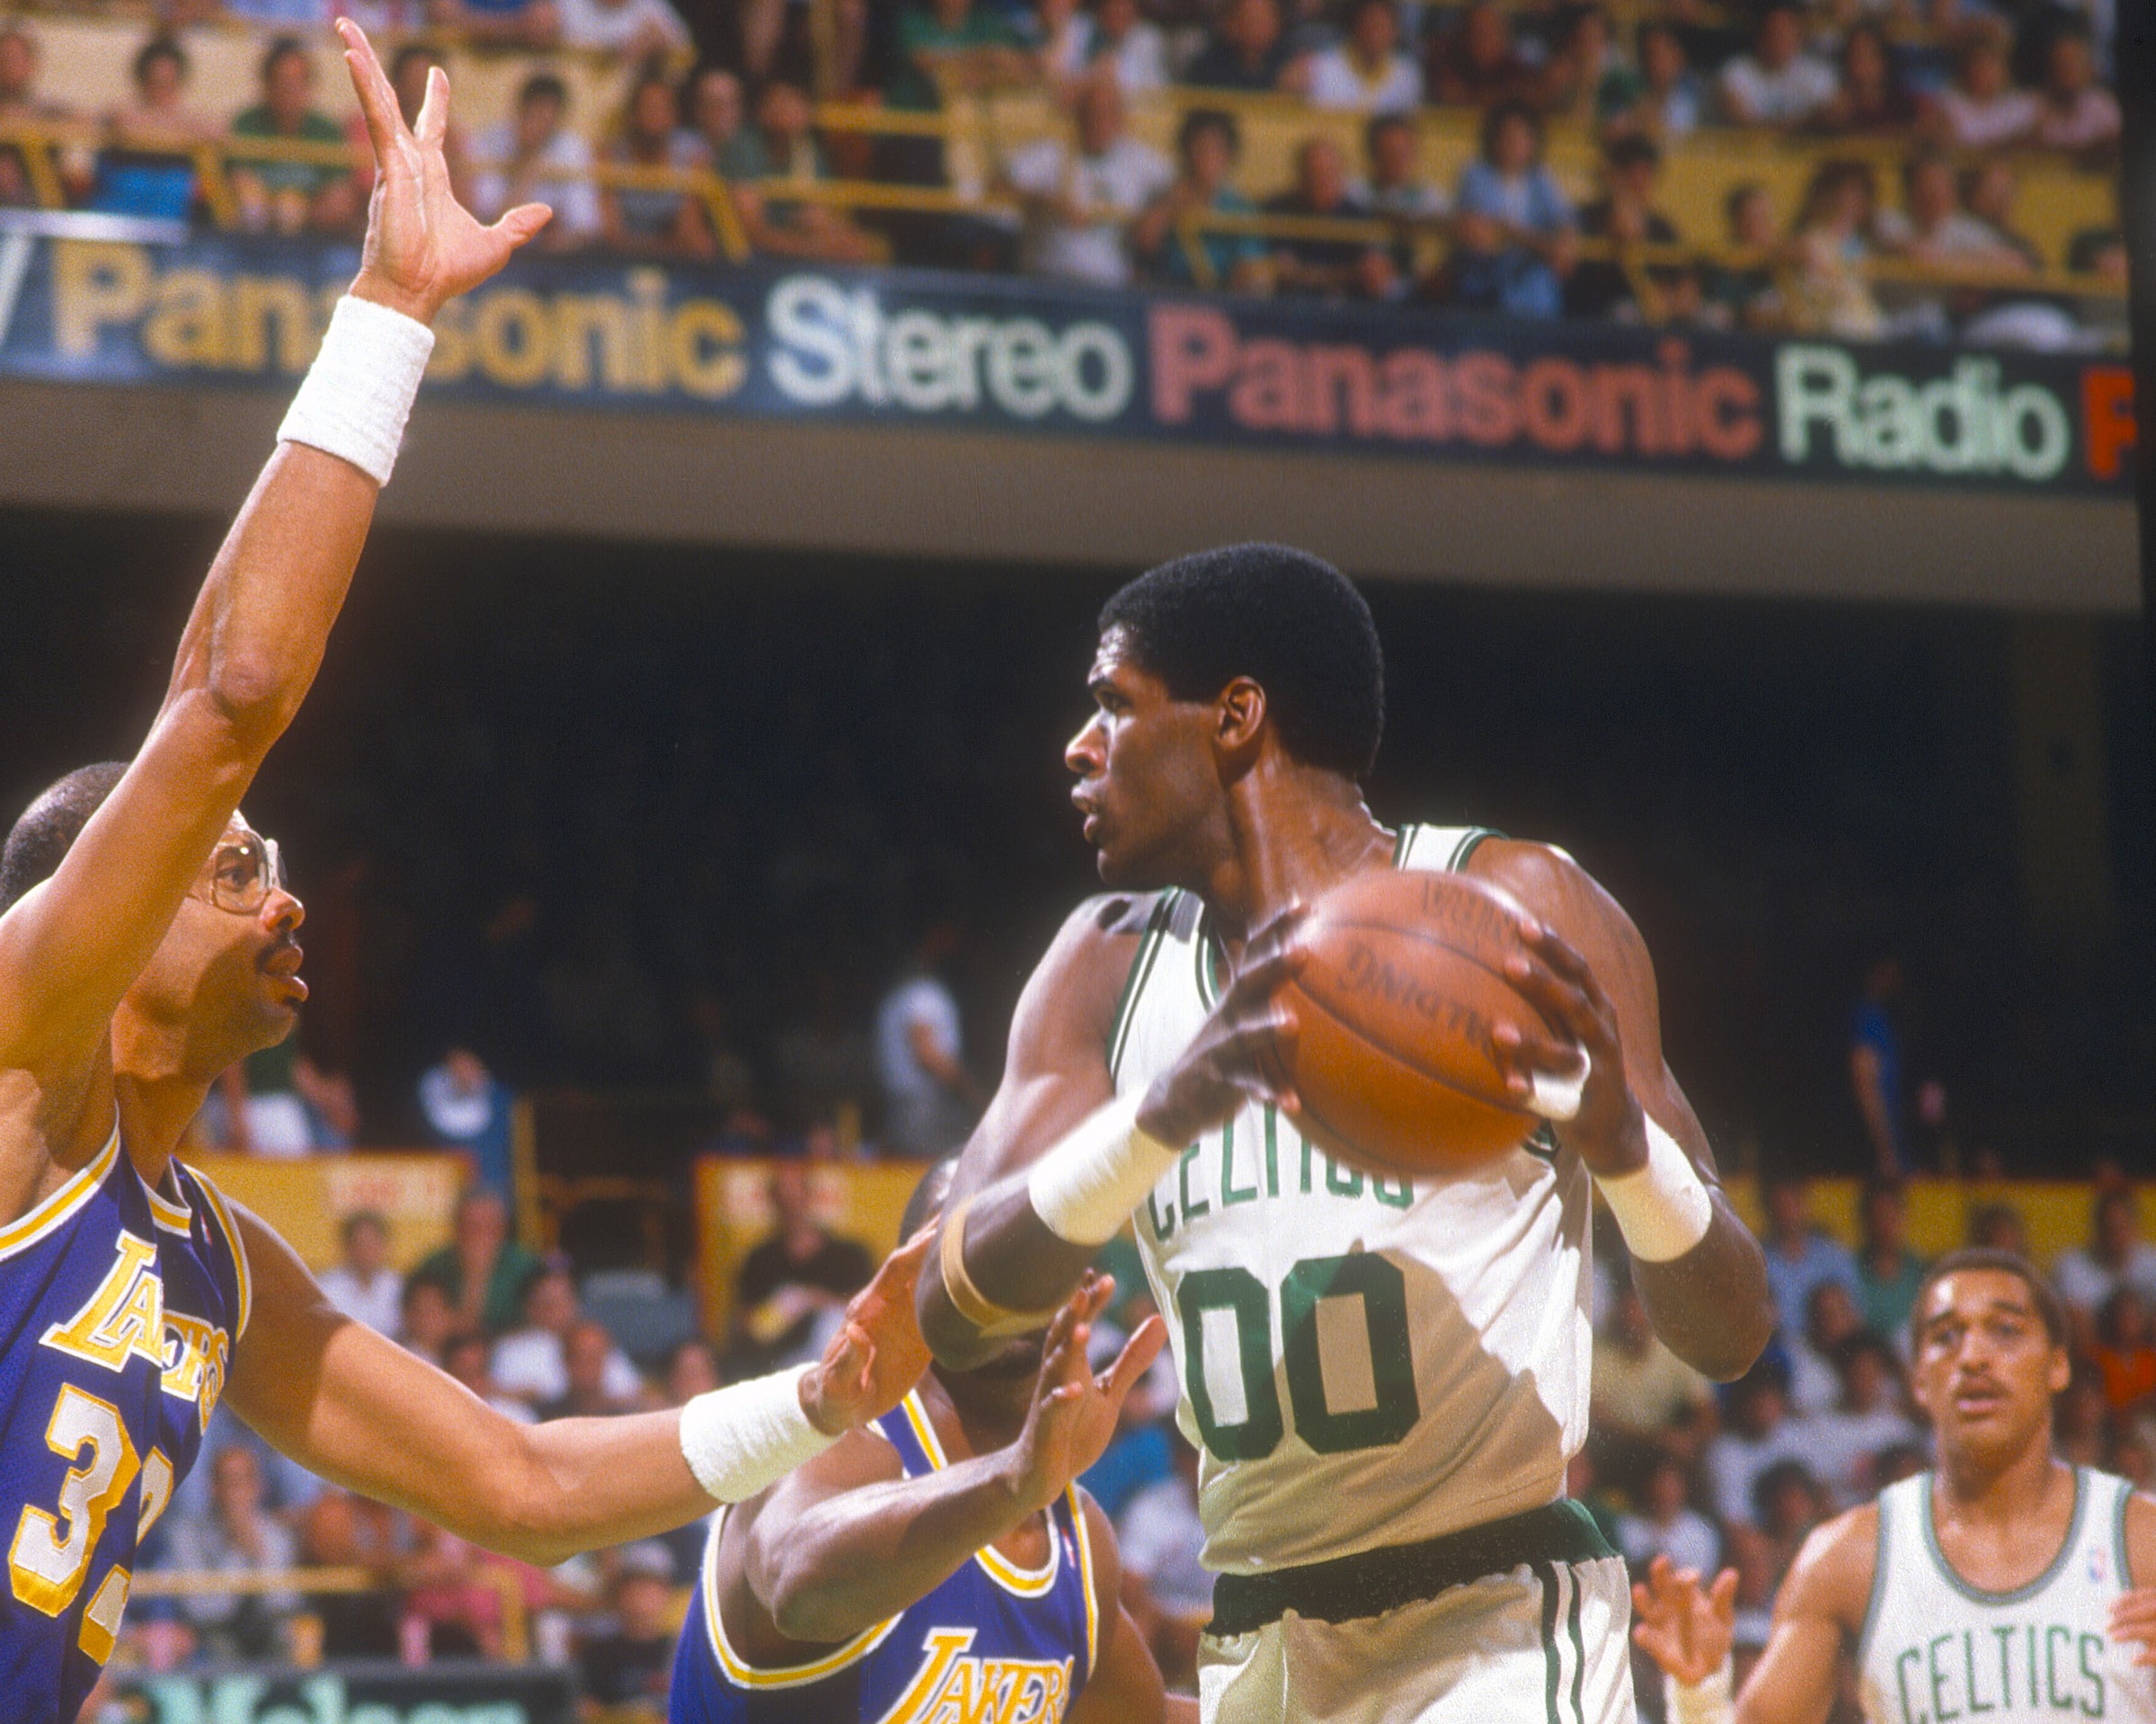 Robert Parish of the Boston Celtics looks to pass the ball over Kareem Abdul-Jabbar.